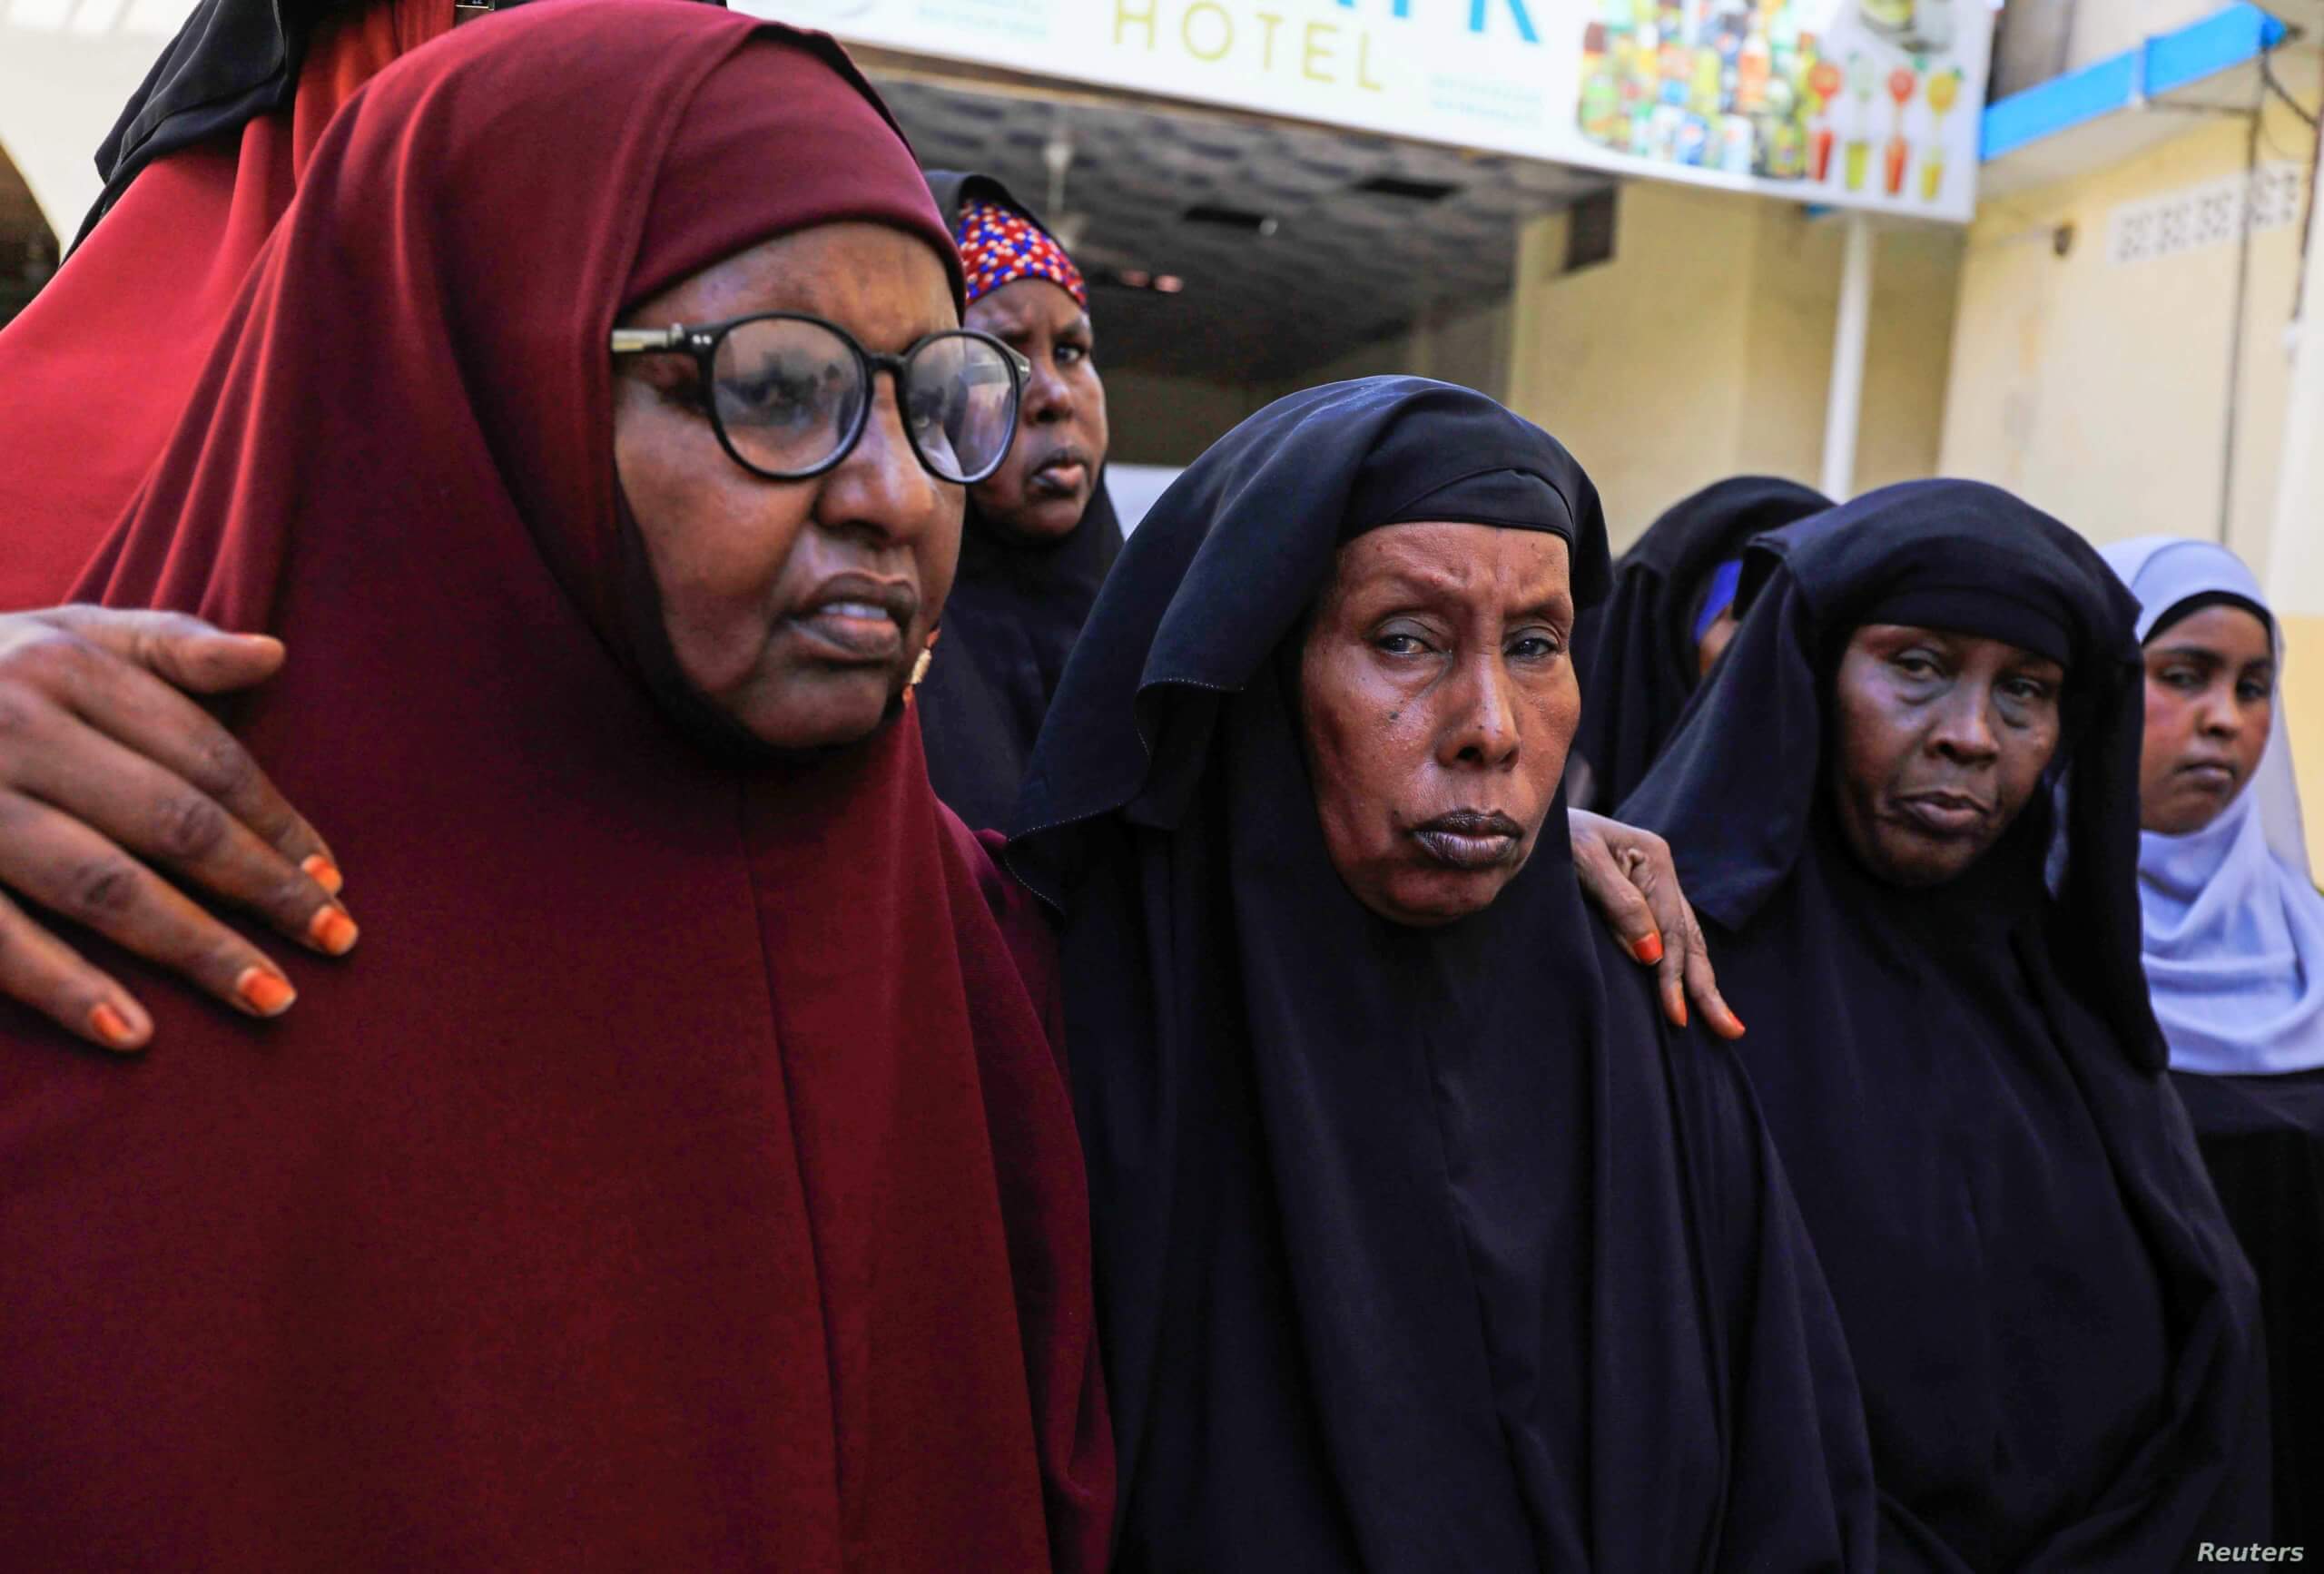 SEXUAL-CRIMES-SOMALIA-AFRICA-NEWS-EASTERN-HERALD